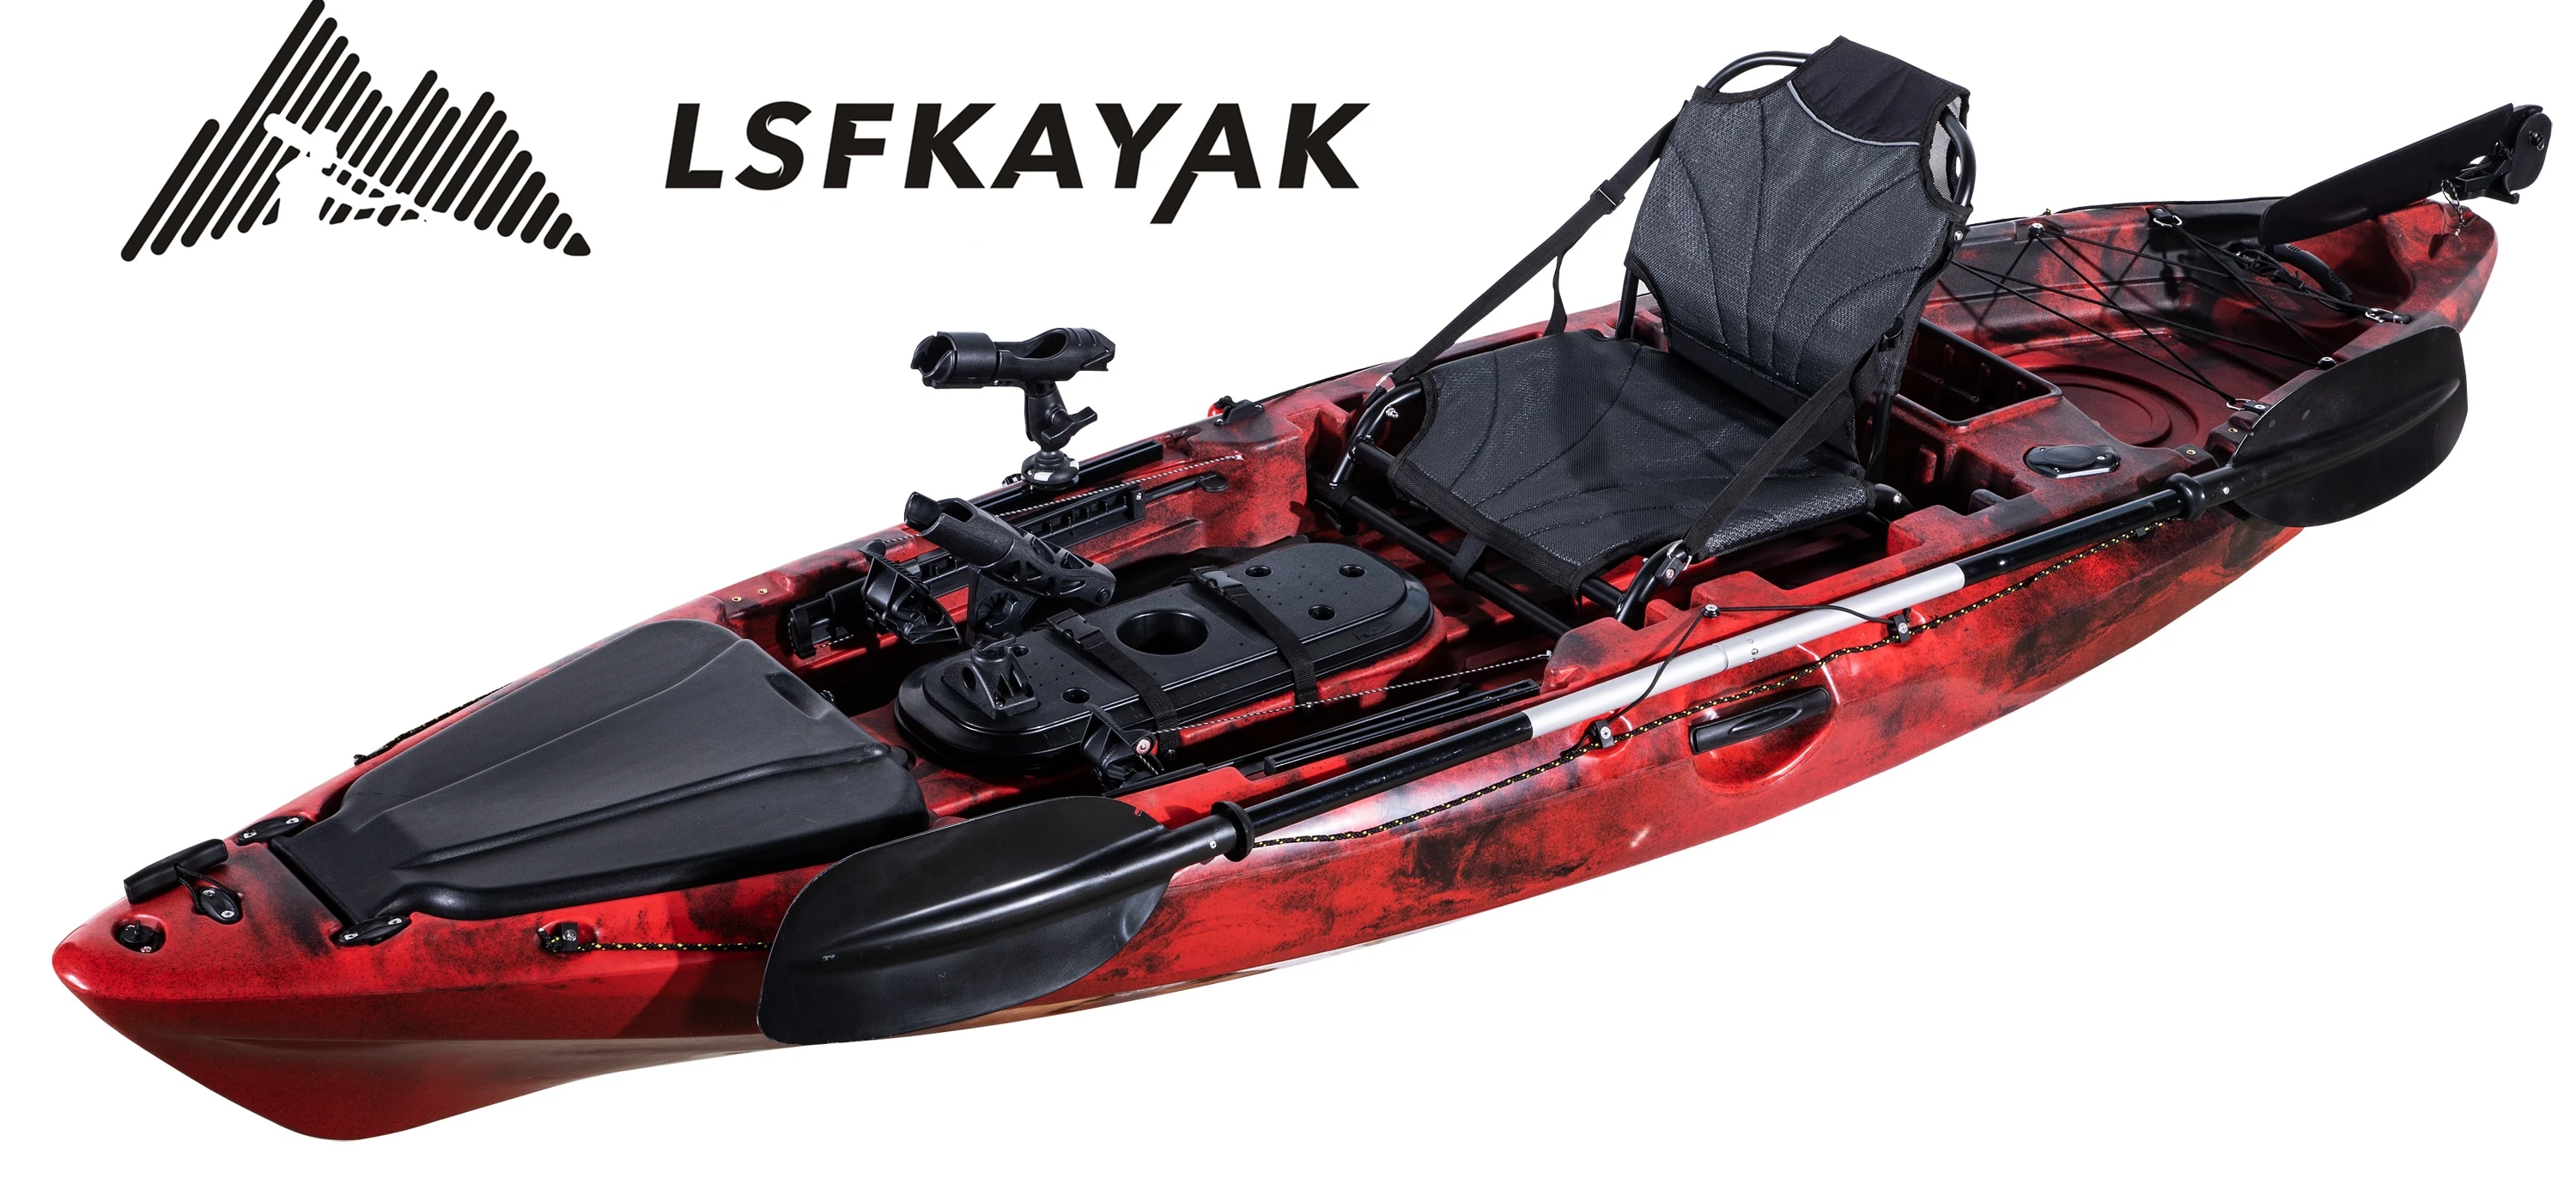 Lsf Kayak Factory 10ft One Person Single 2020 New Fishing Kayak Boat